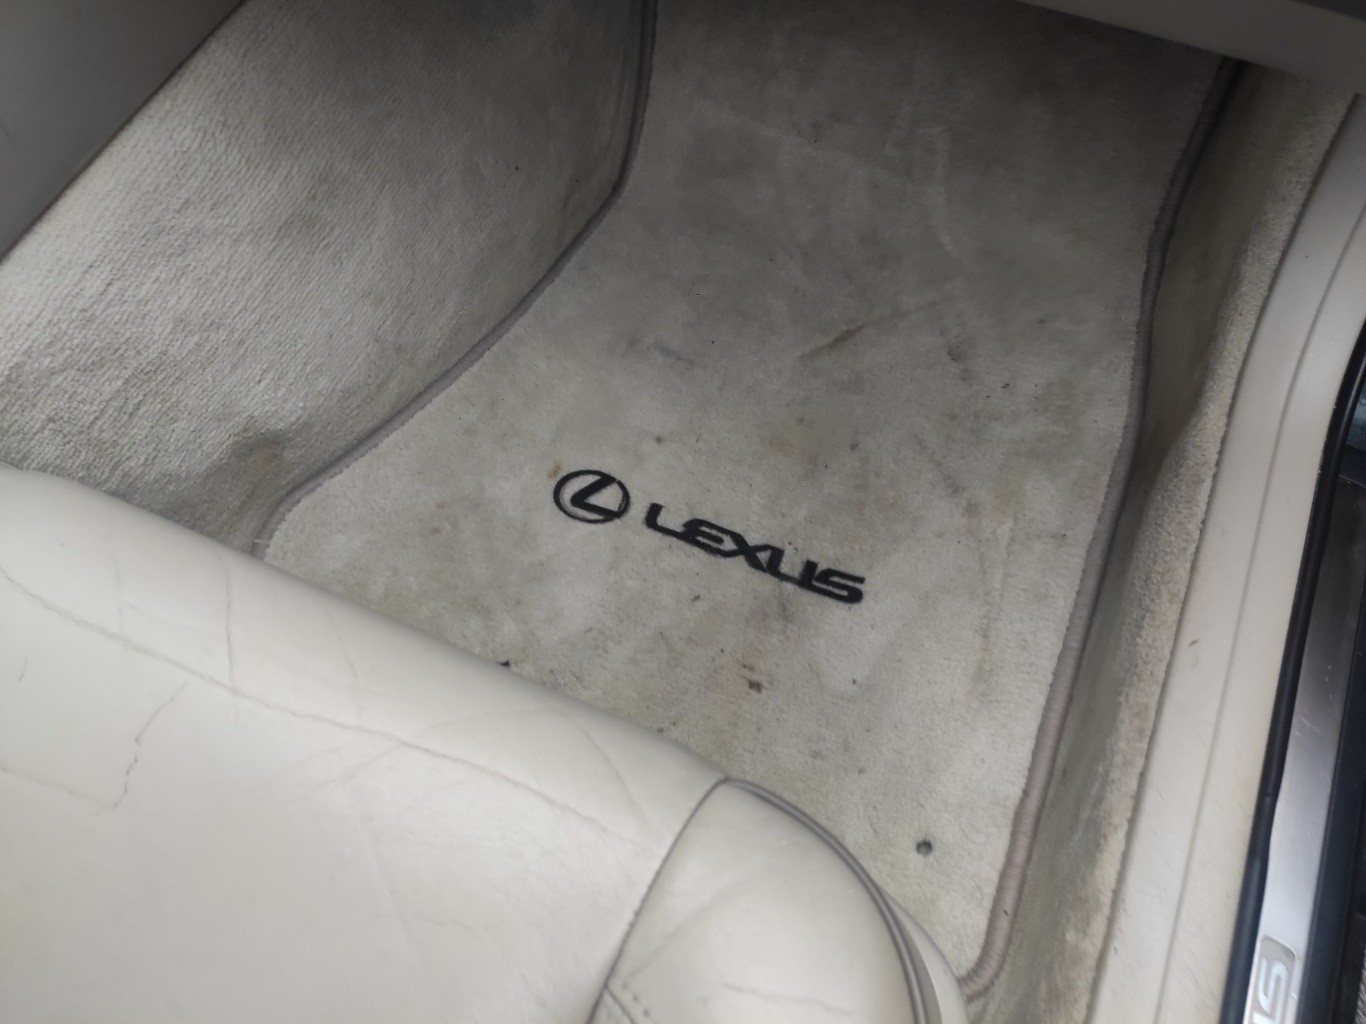 Lexus GS 300 car interior (white leather and white carpet)